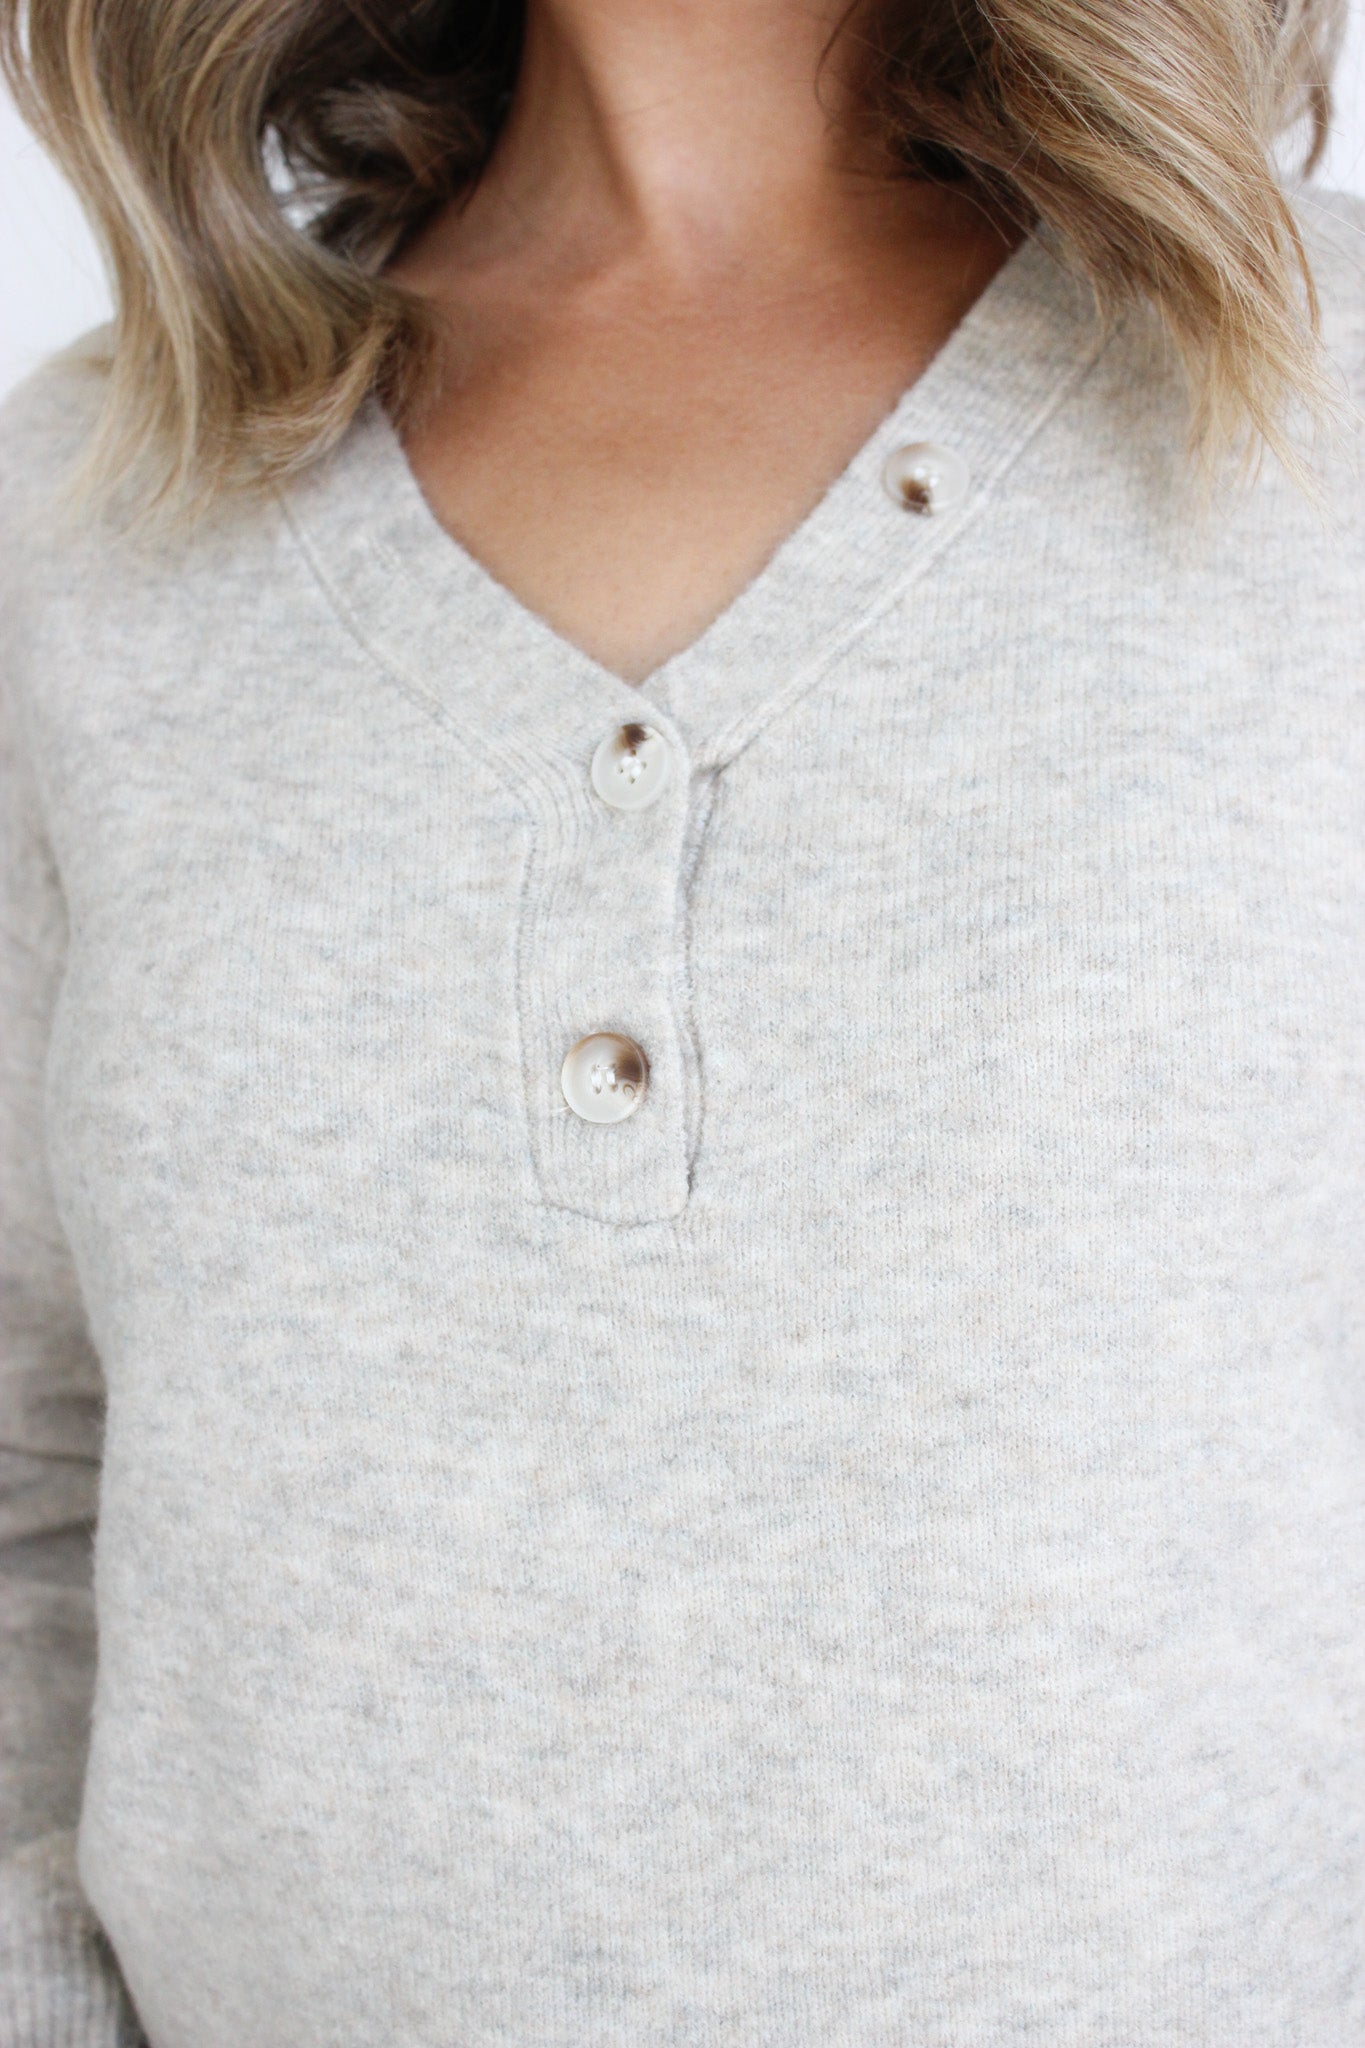 Button Henley Sweater